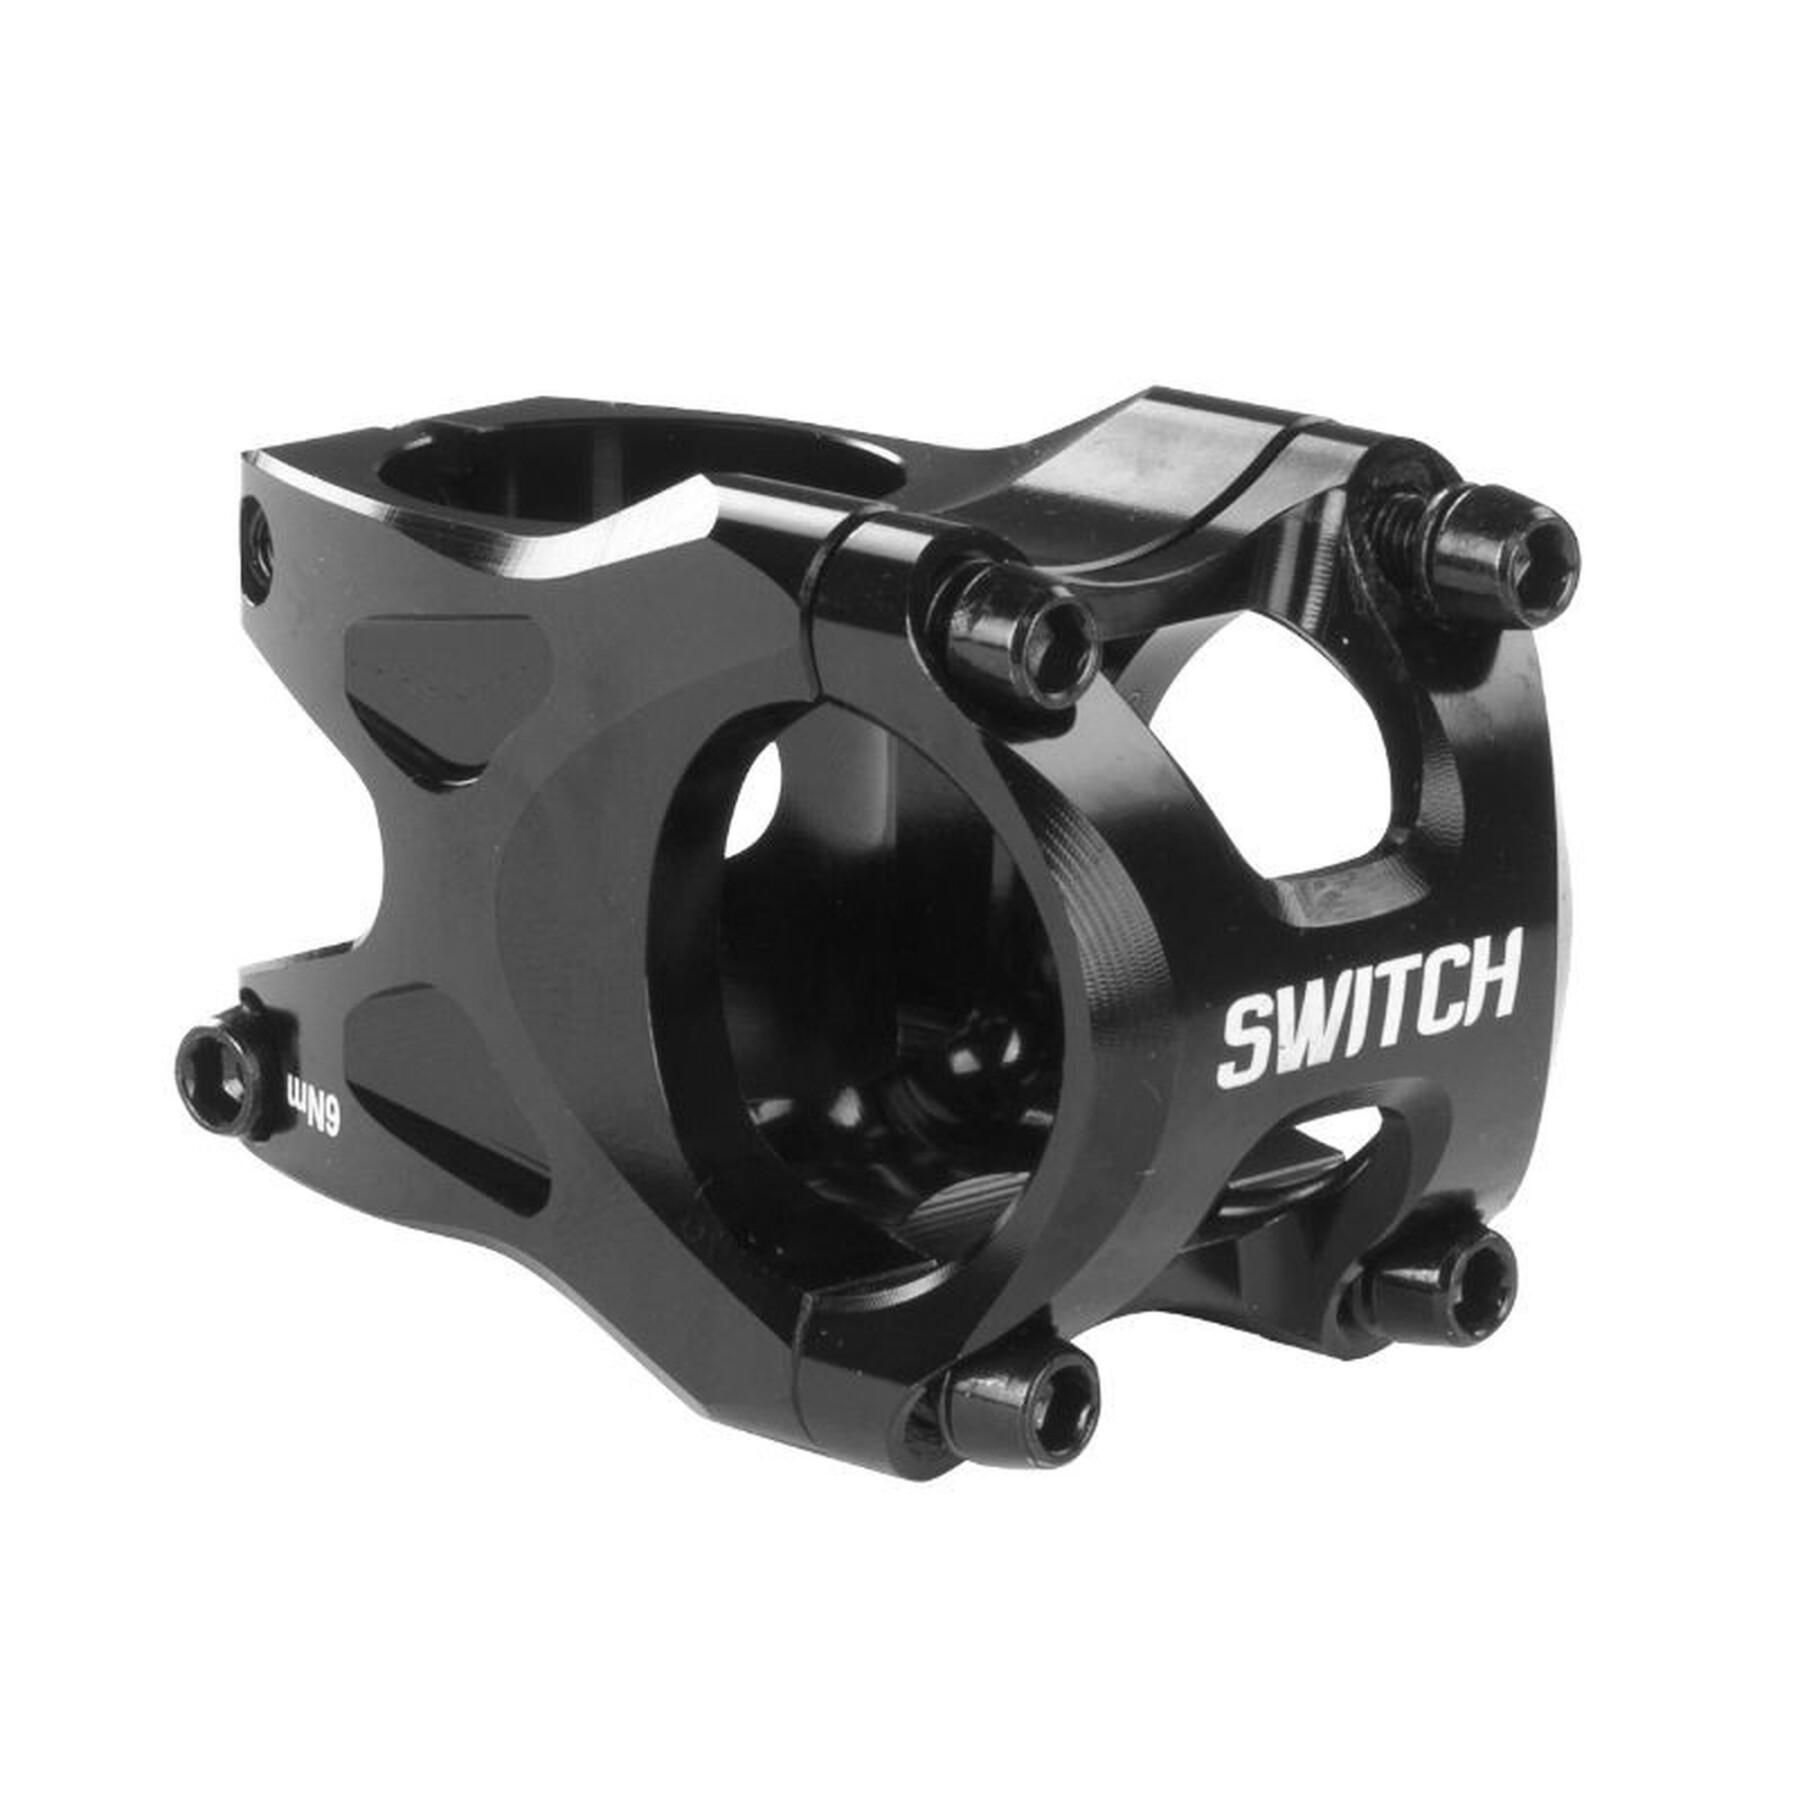 Potence VTT cintre Gist Switch Toboga 35 35 mm Dh L 45 mm